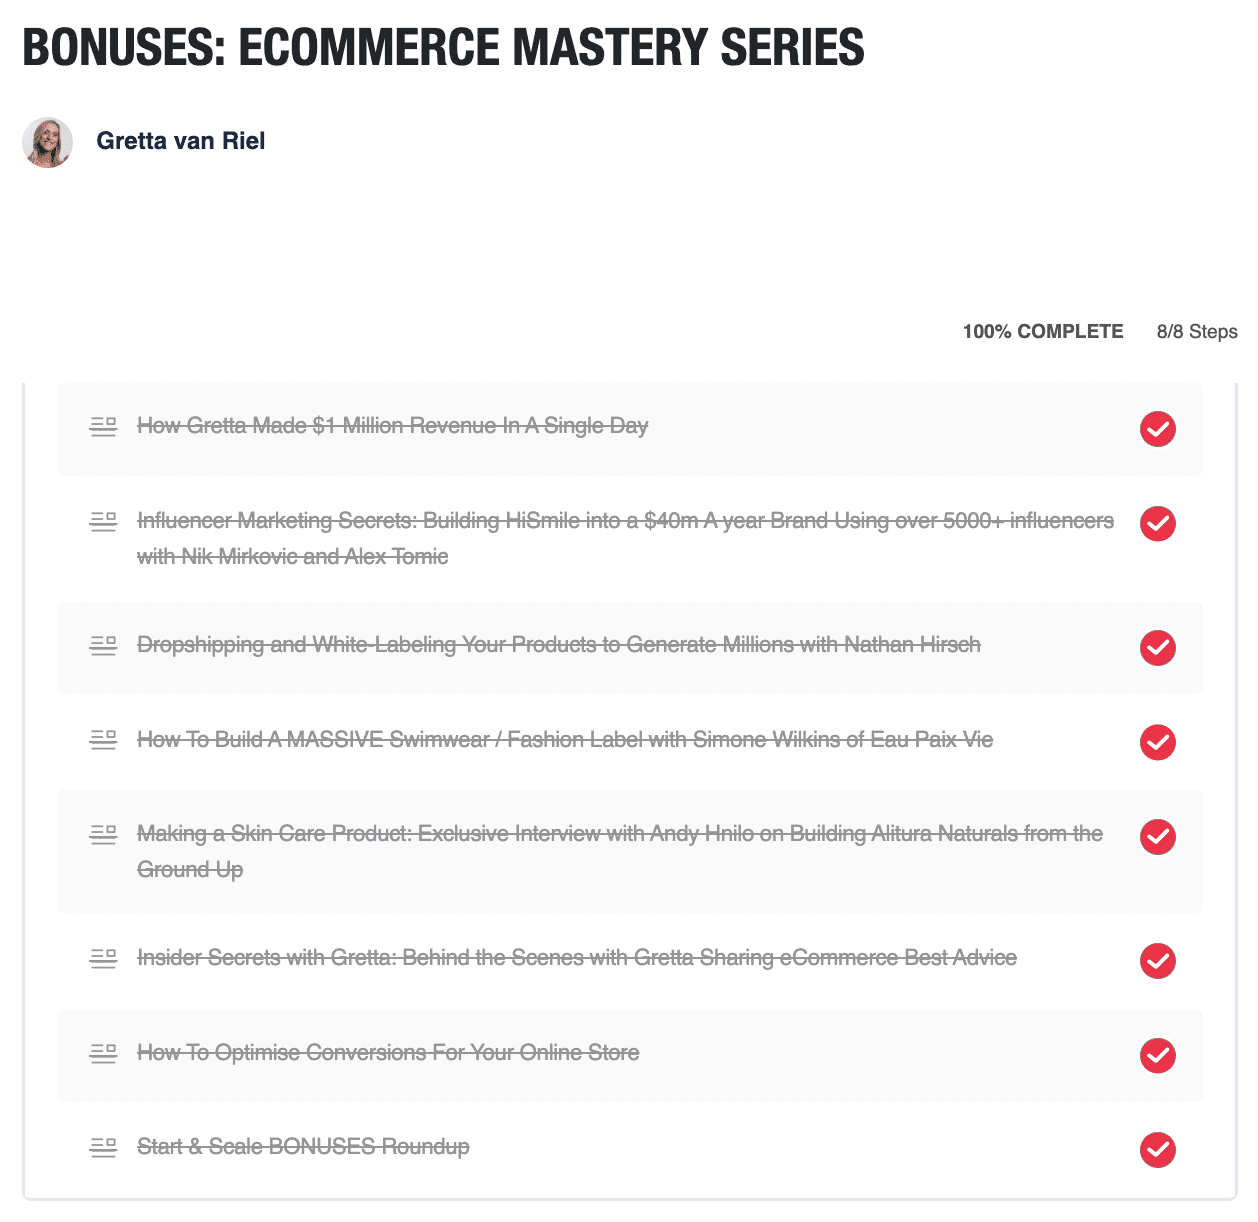 BONUS 1: Ecommerce Mastery Series